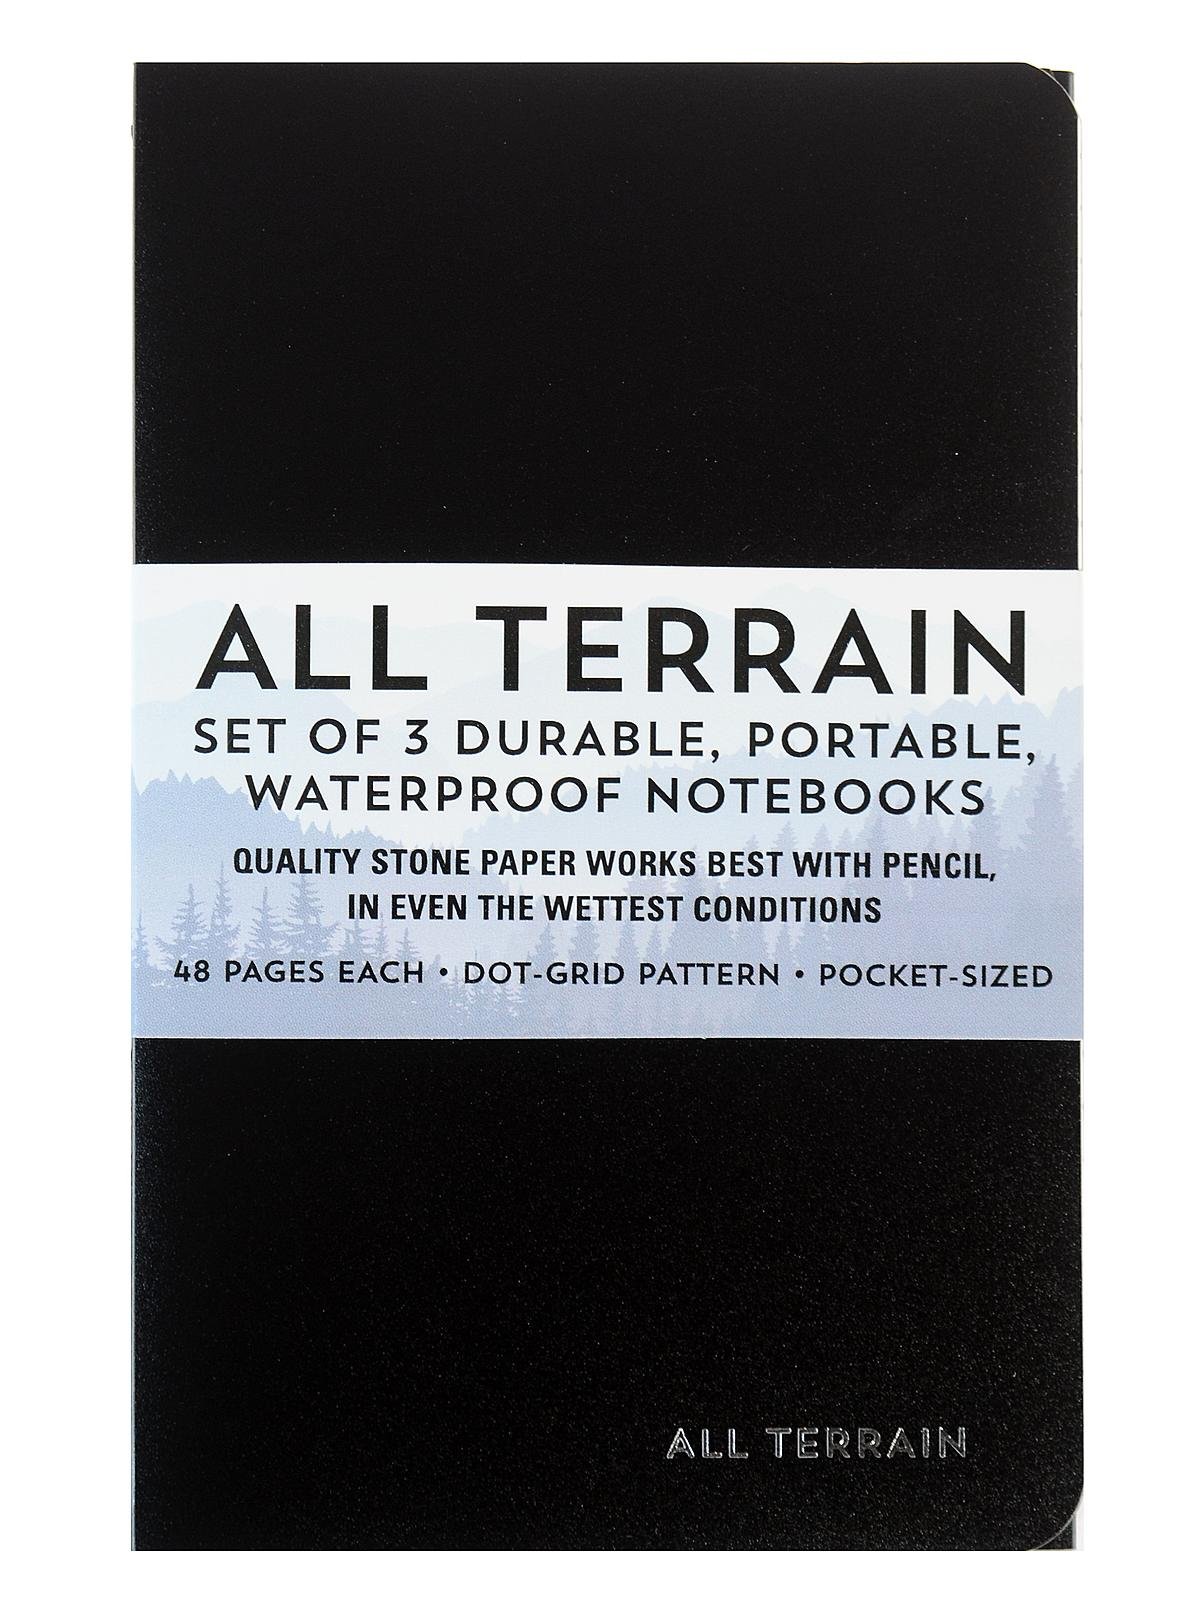 Peter Pauper - All Terrain: The Waterproof Notebook